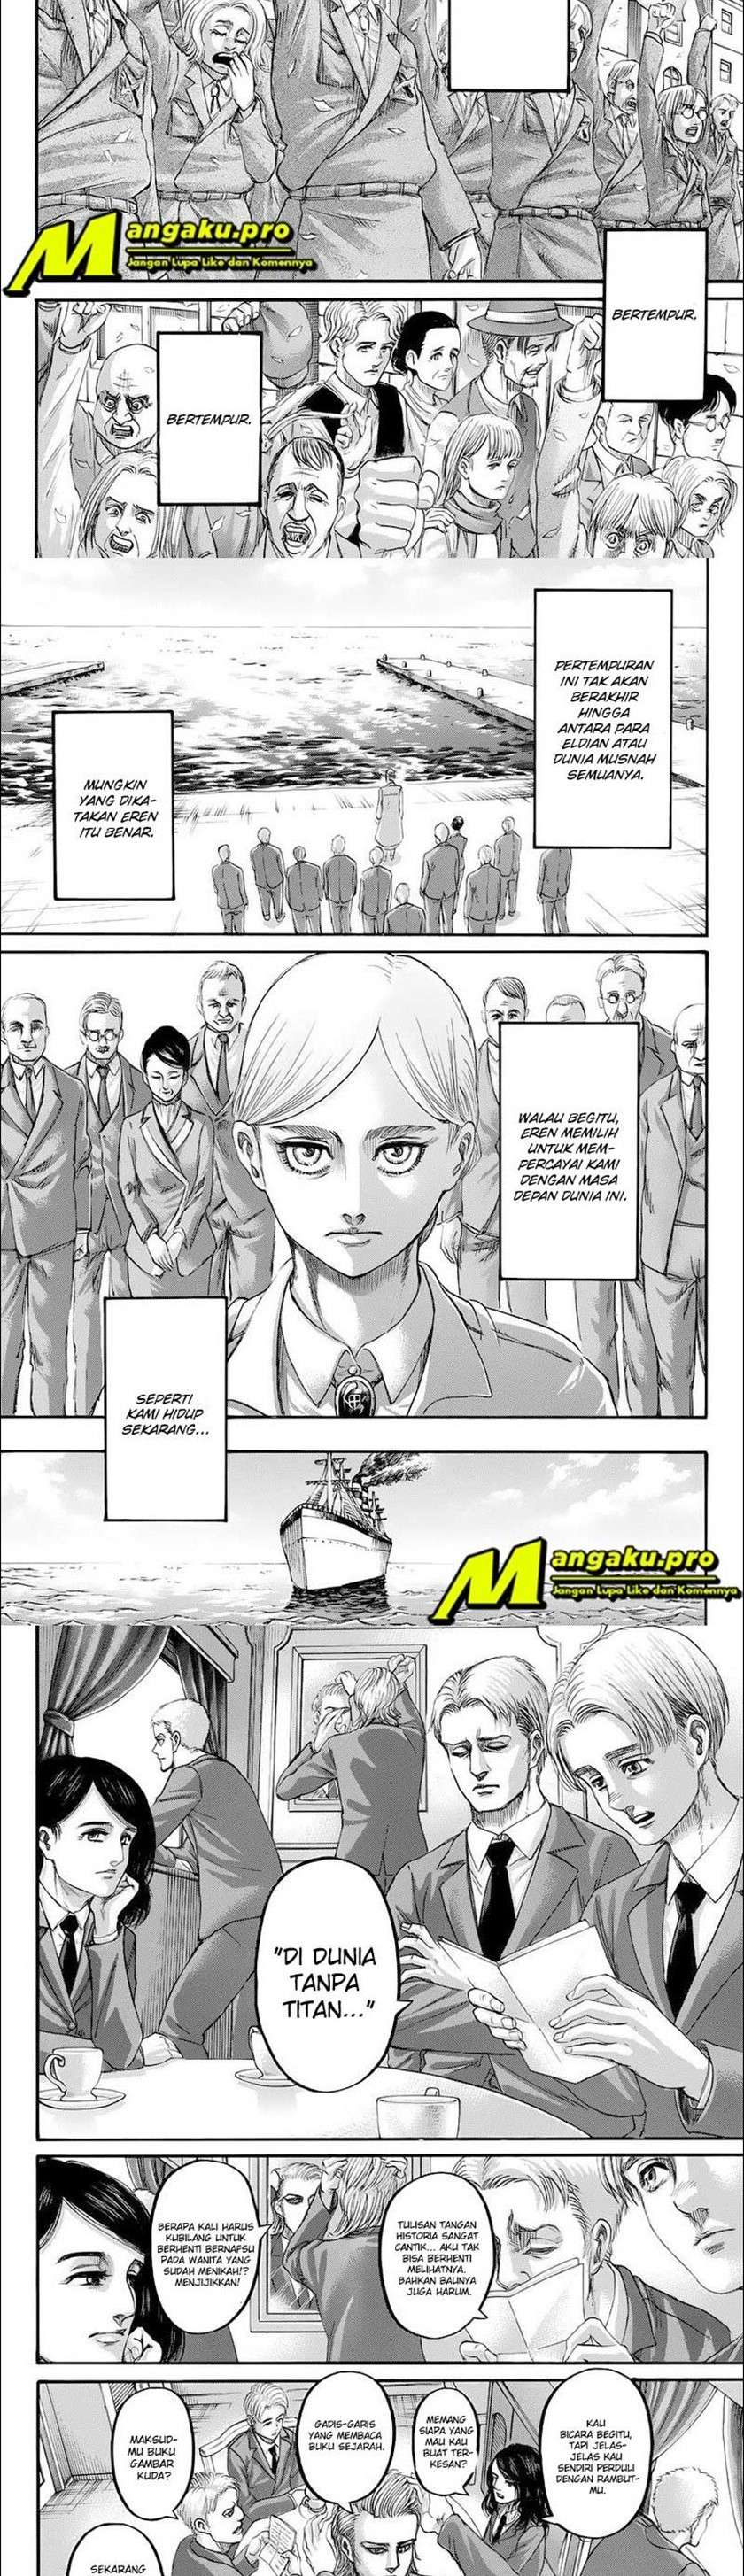 Shingeki no Kyojin Chapter 139.2 – end